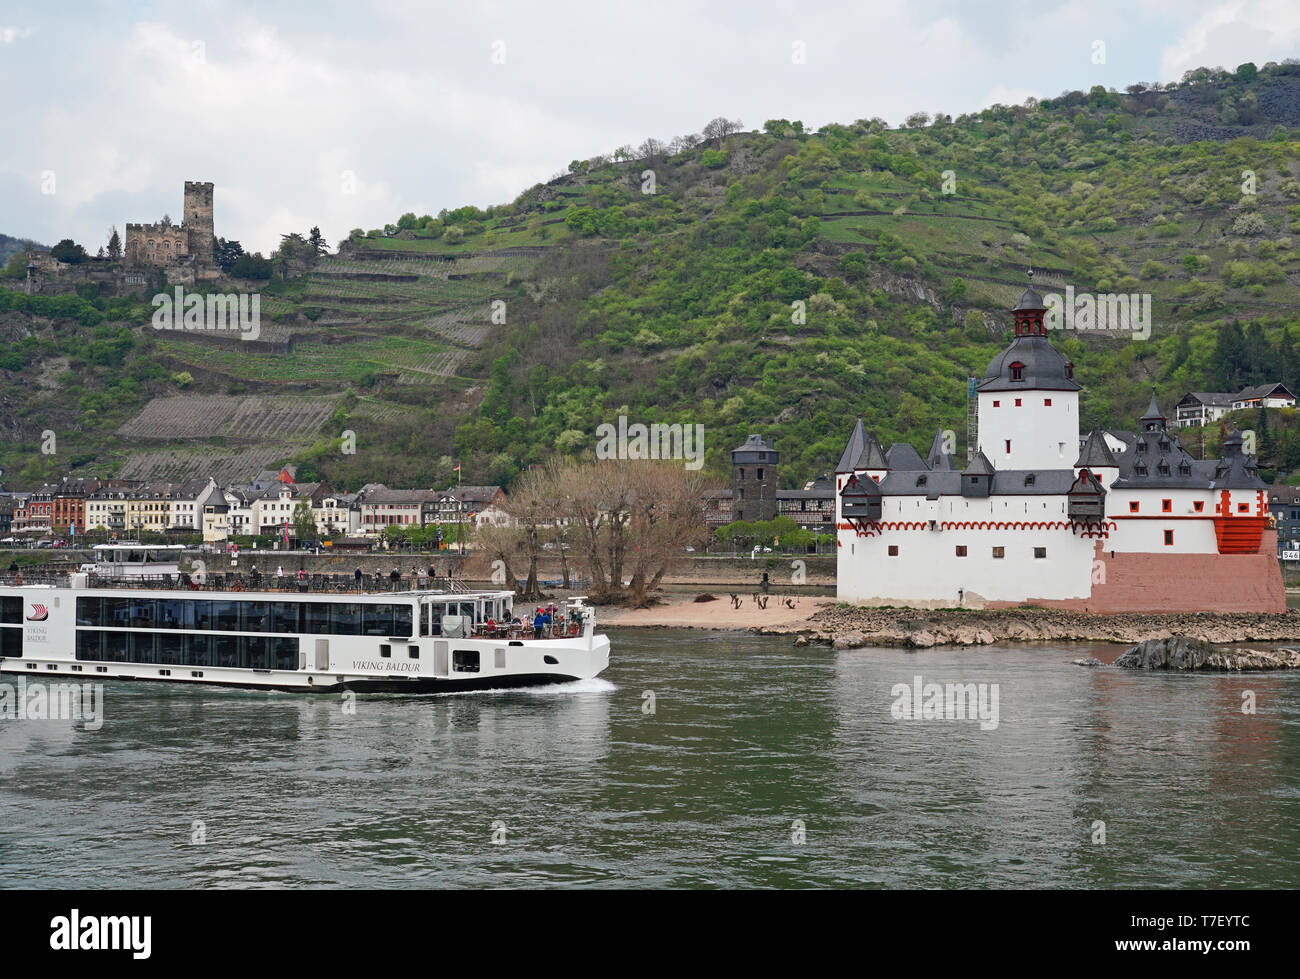 Viking River Cruises longship am Rhein in Deutschland Stockfoto